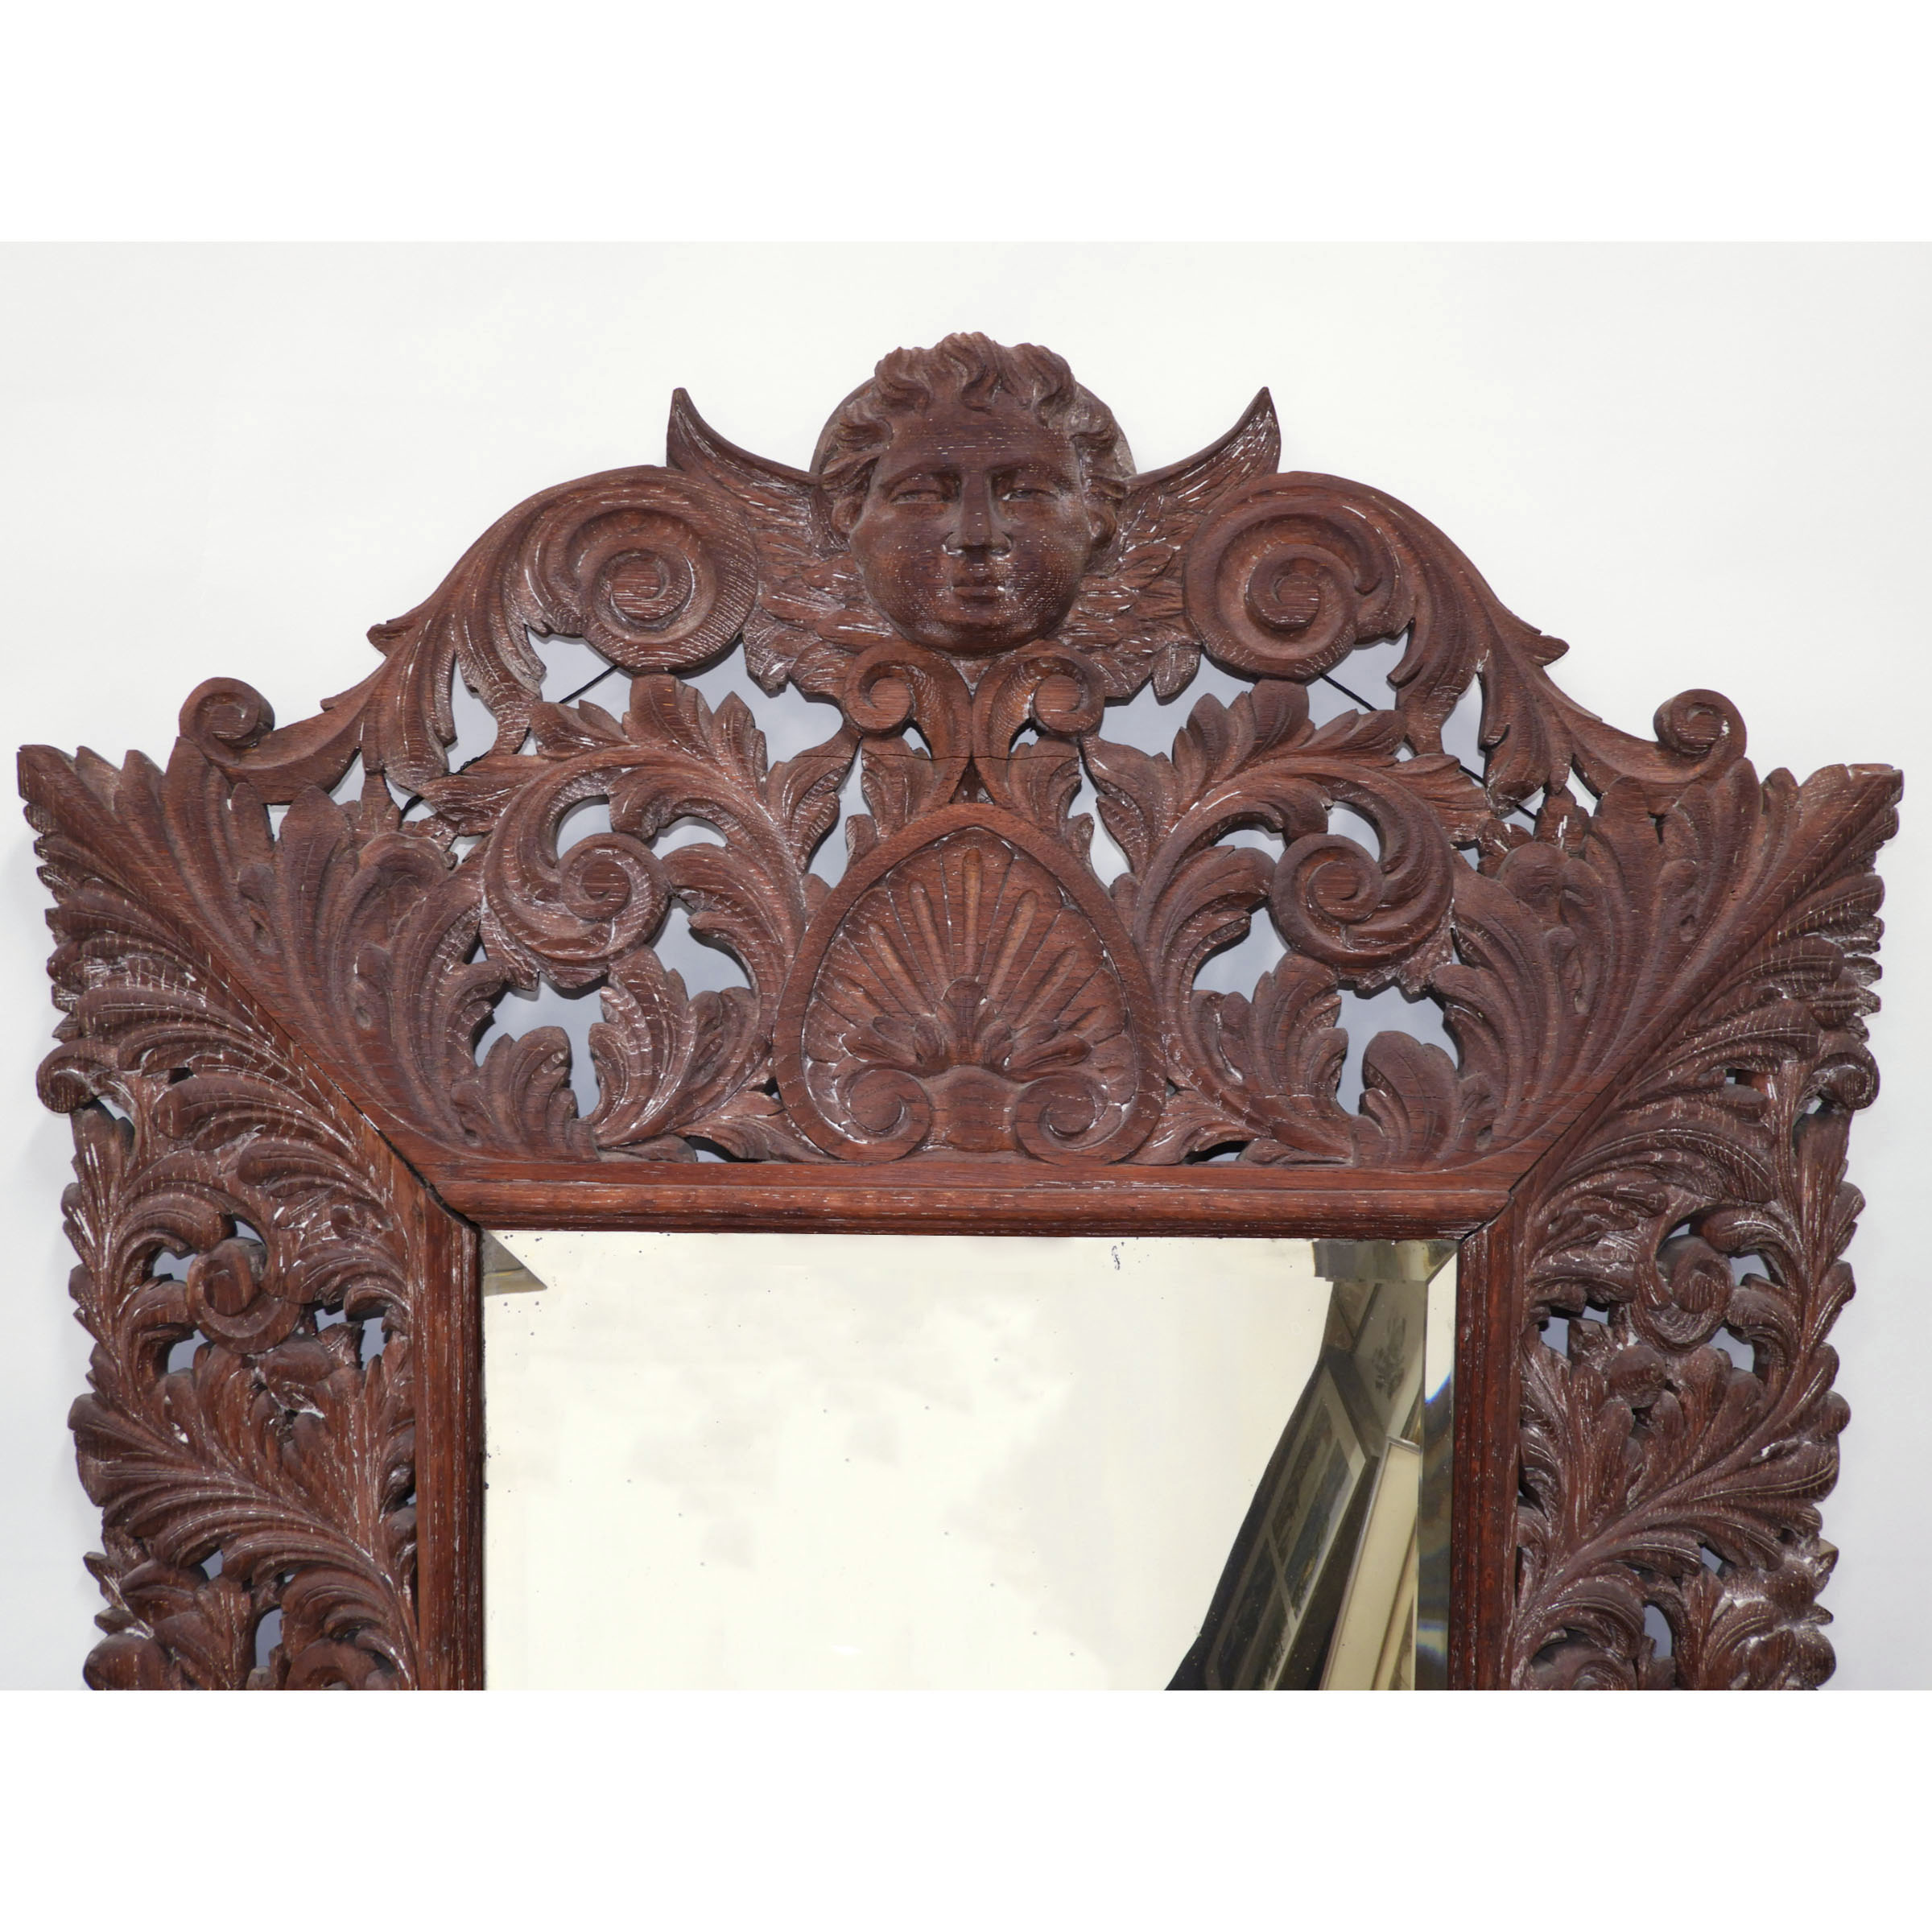 Continental Carved Oak Cushion Mirror, 19th century